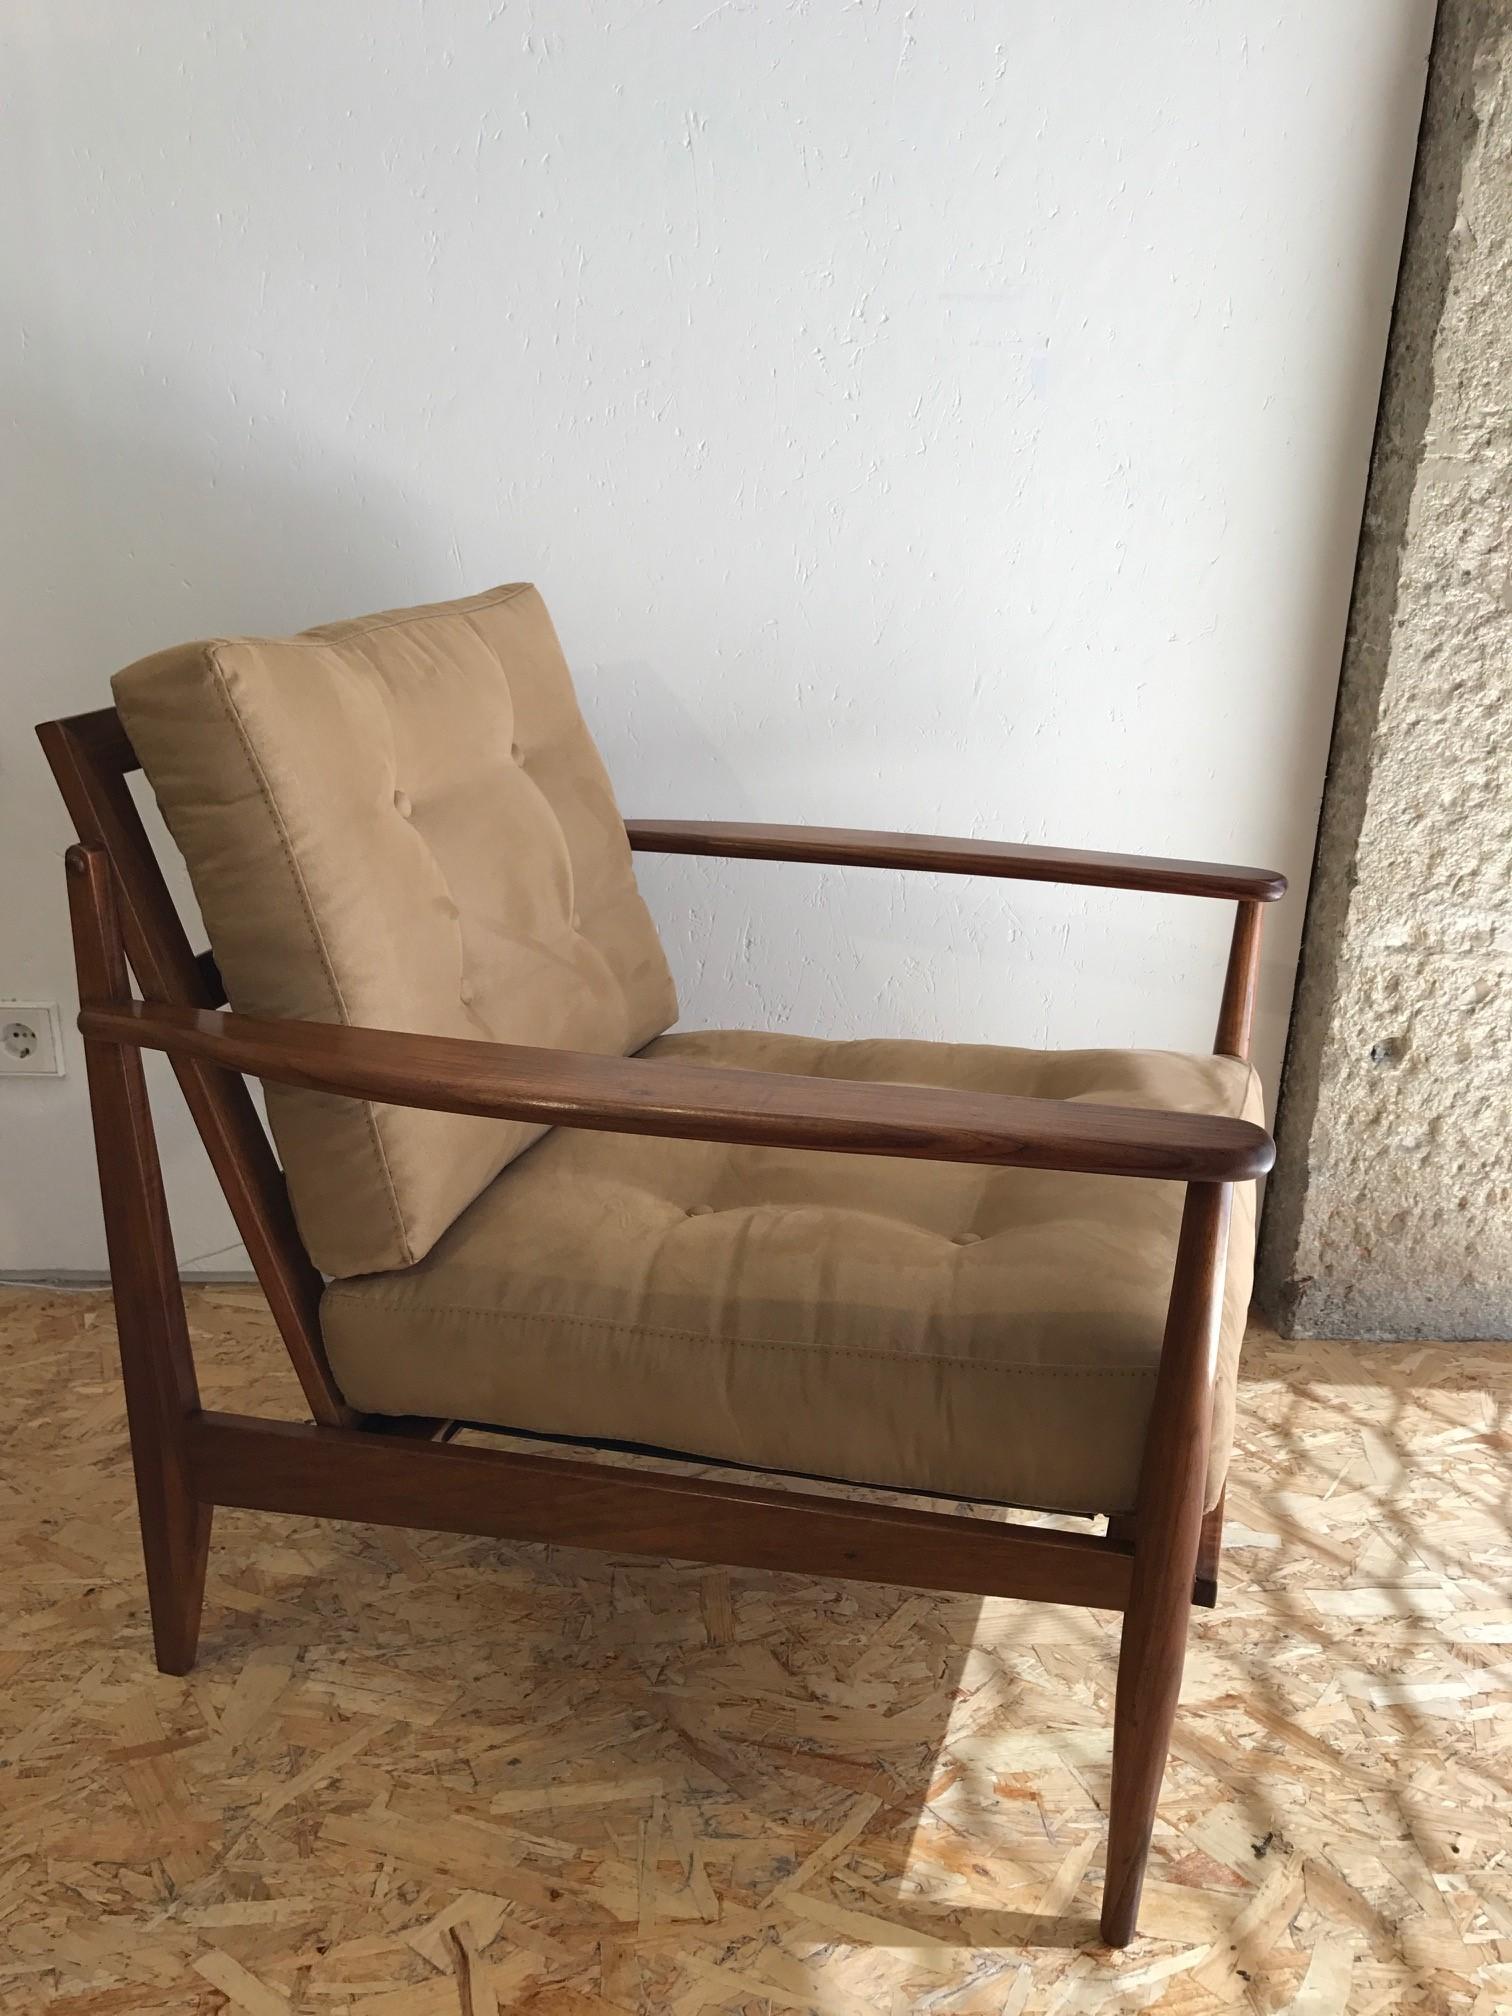 1960s Brazilian armchairs, pau santo wood, recently reupholstered.